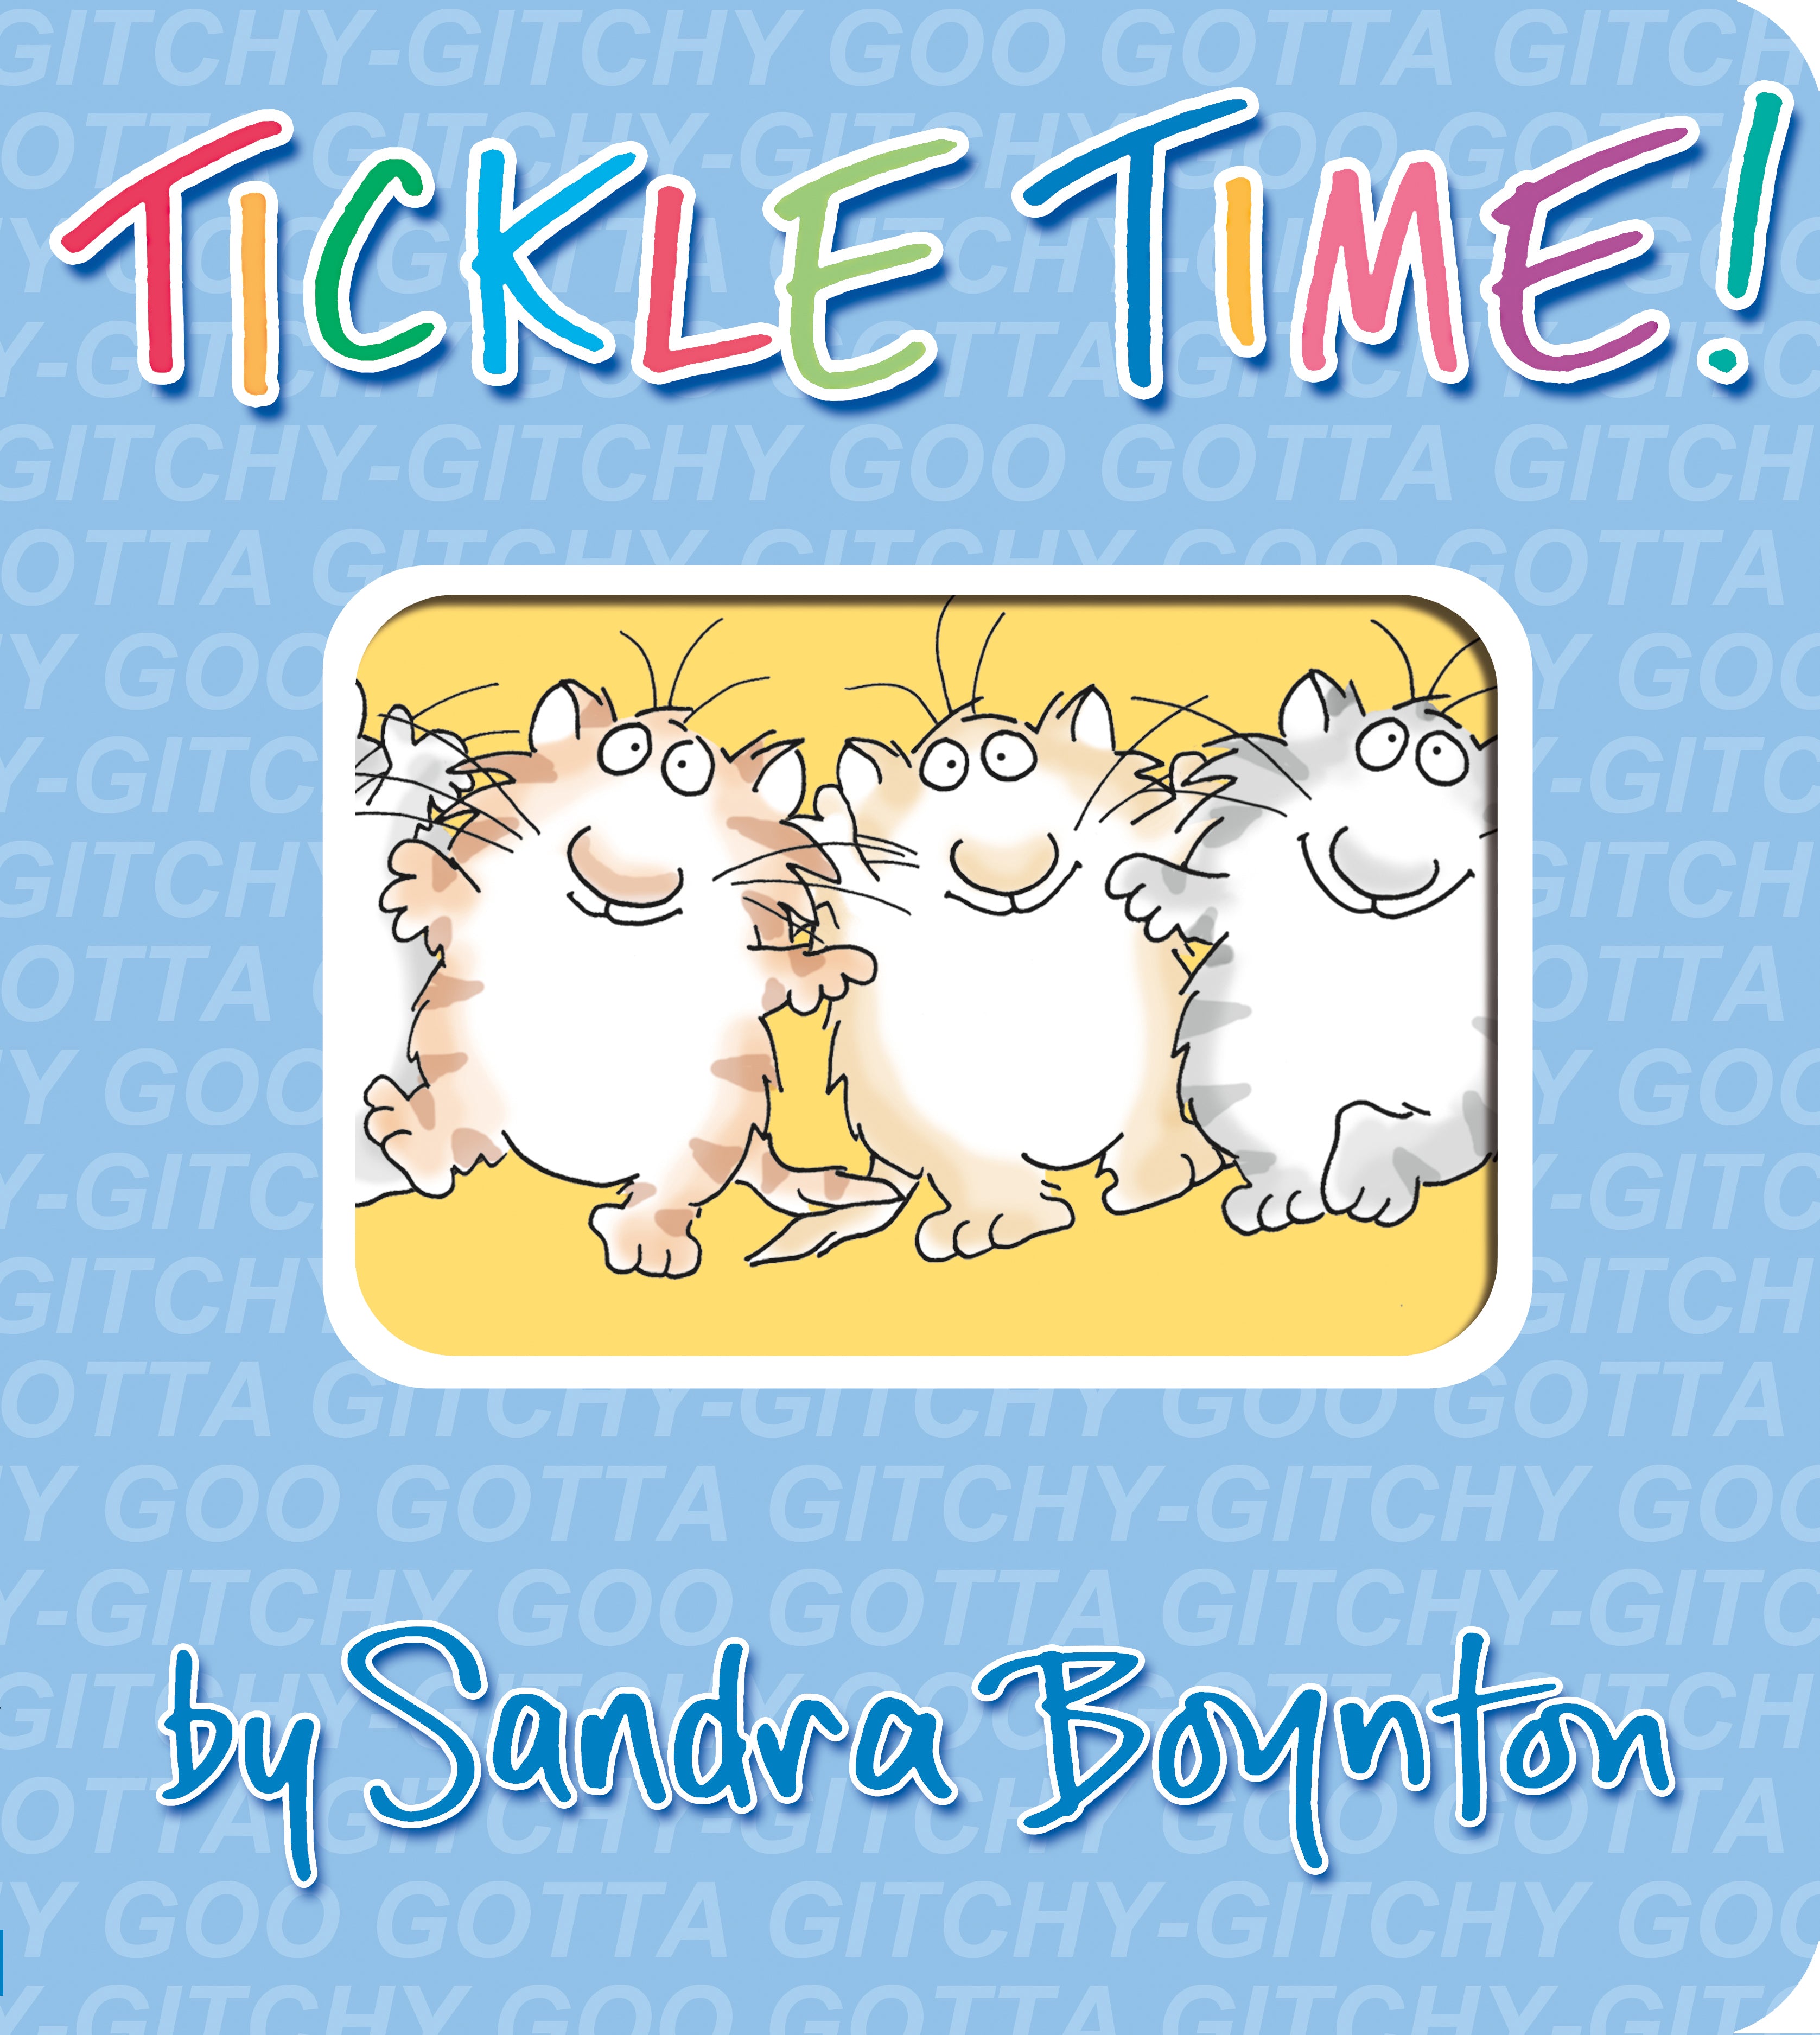 Tickle Time! - Board Book    